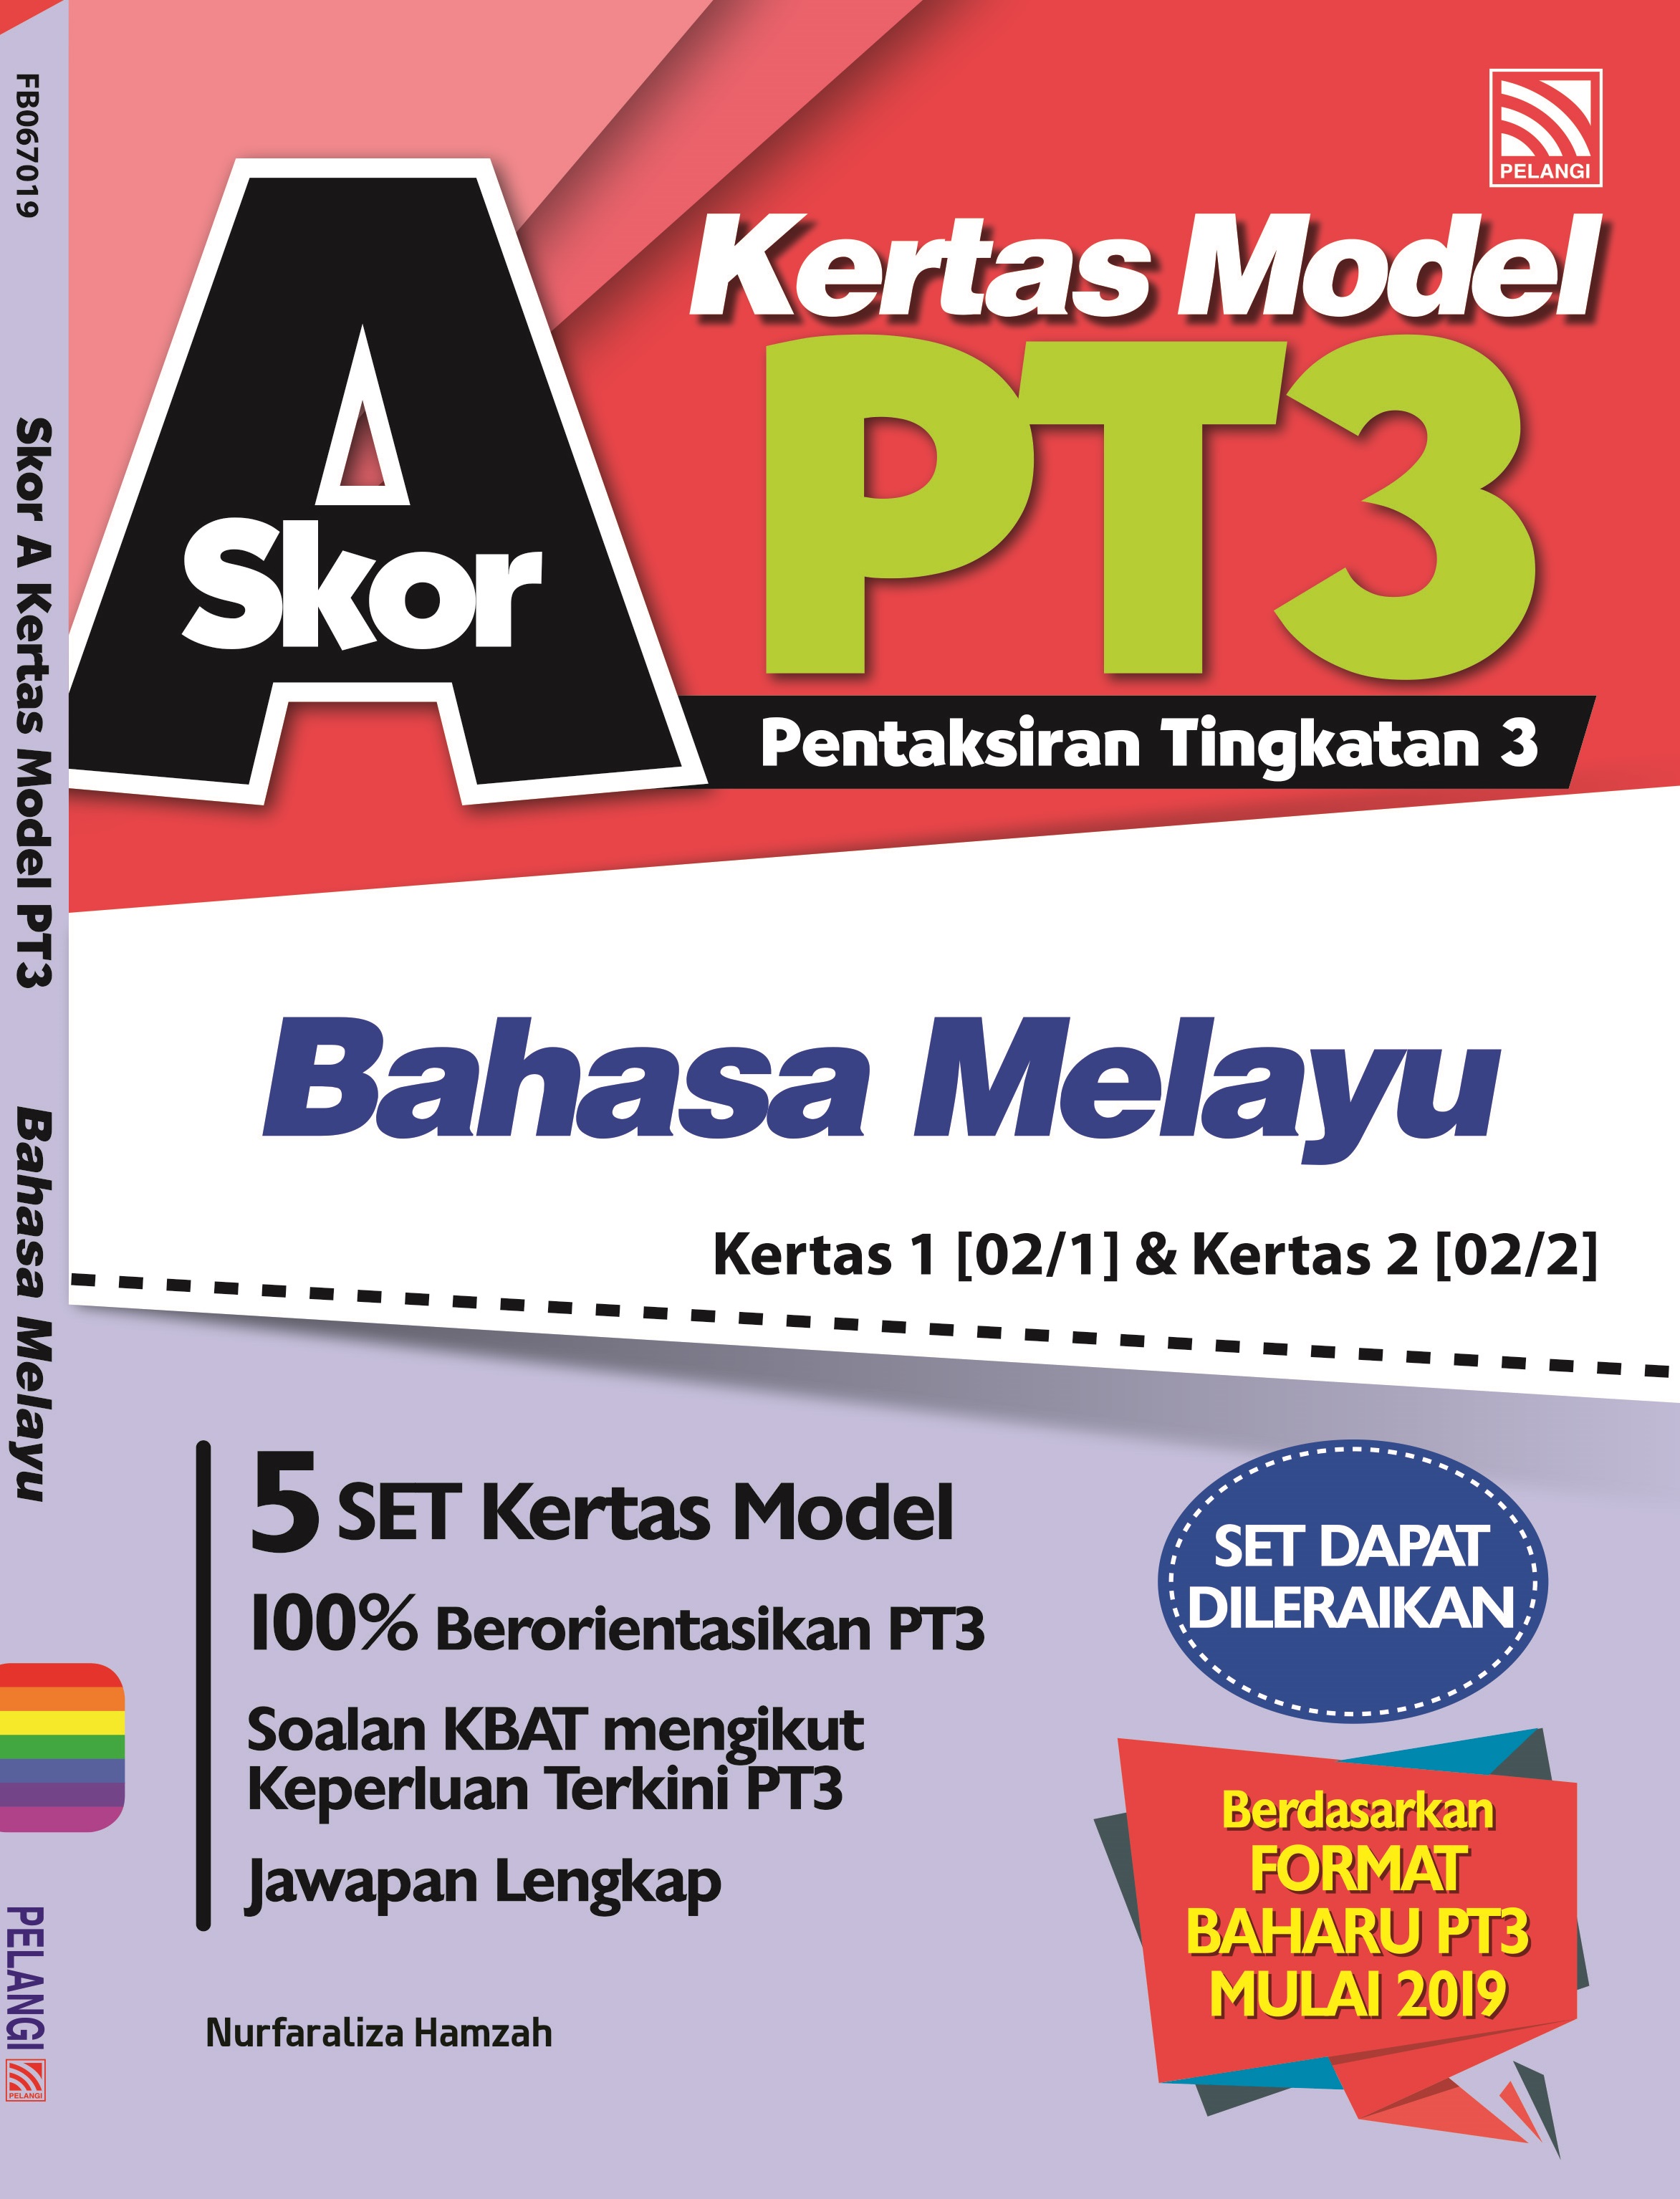 Skor A Kertas Model Pt3 2019 Bahasa Melayu